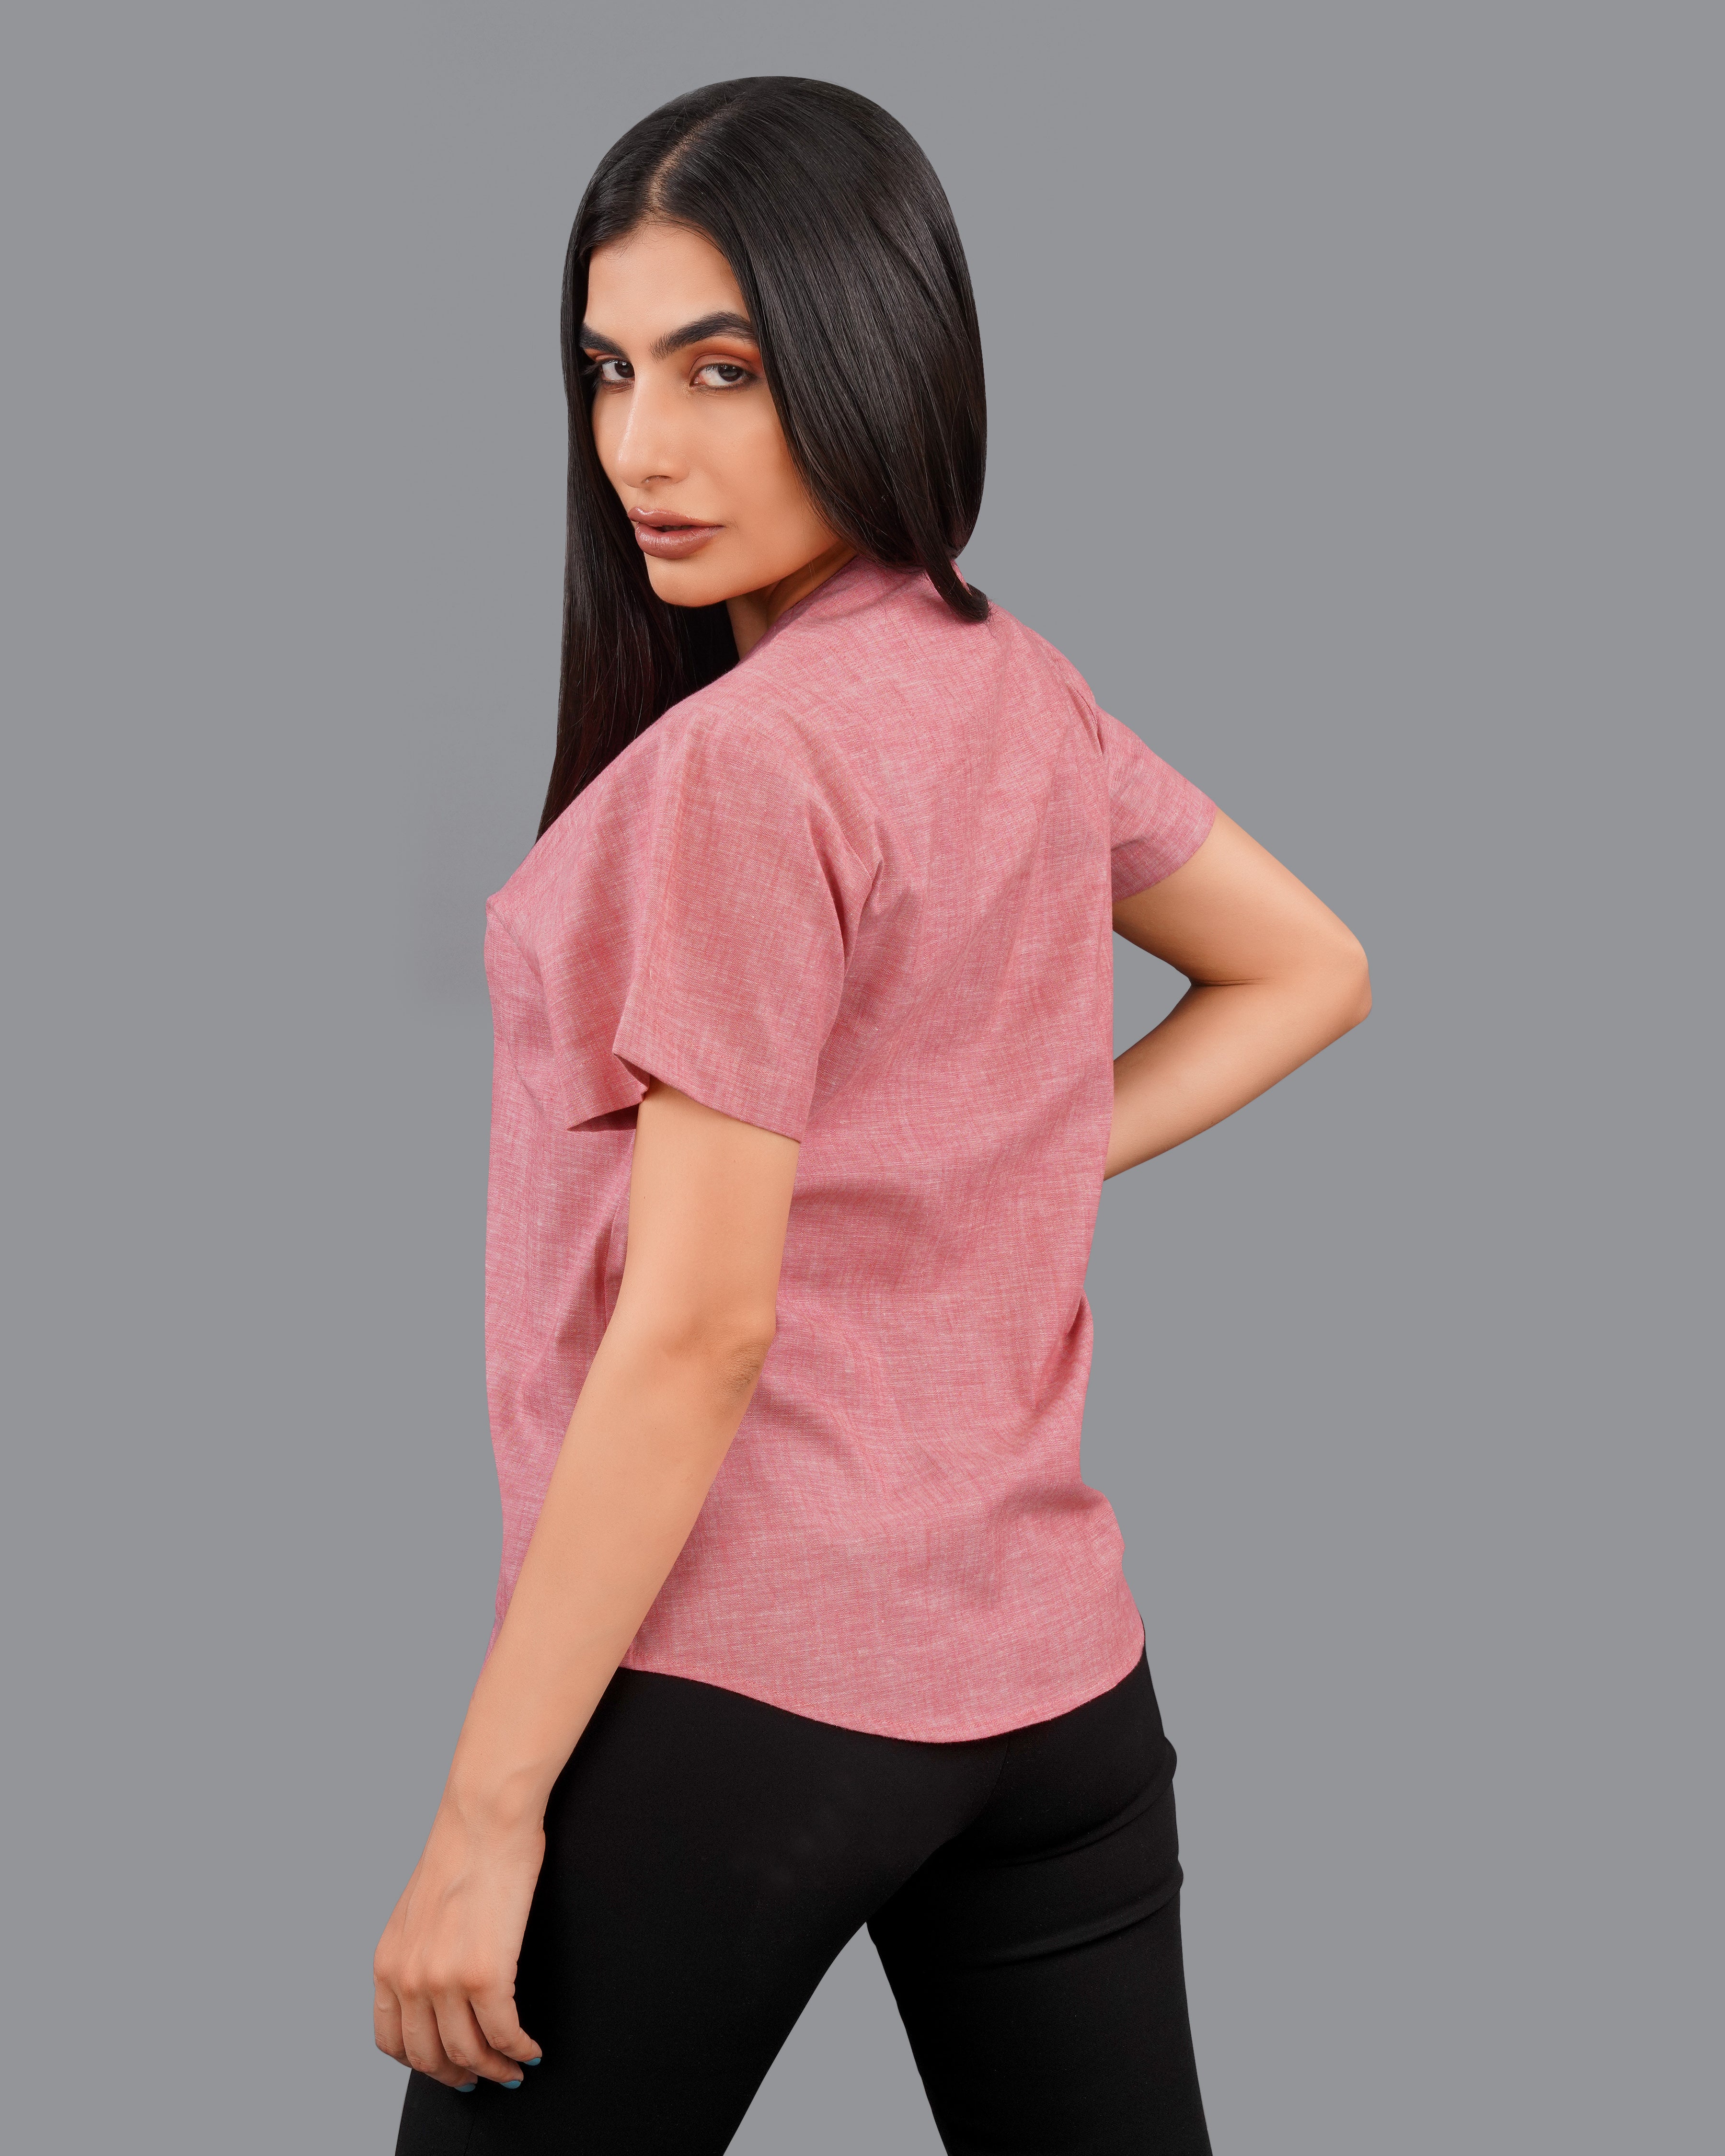 Faded Pink Premium Cotton Shirt WS009-32, WS009-34, WS009-36, WS009-38, WS009-40, WS009-42